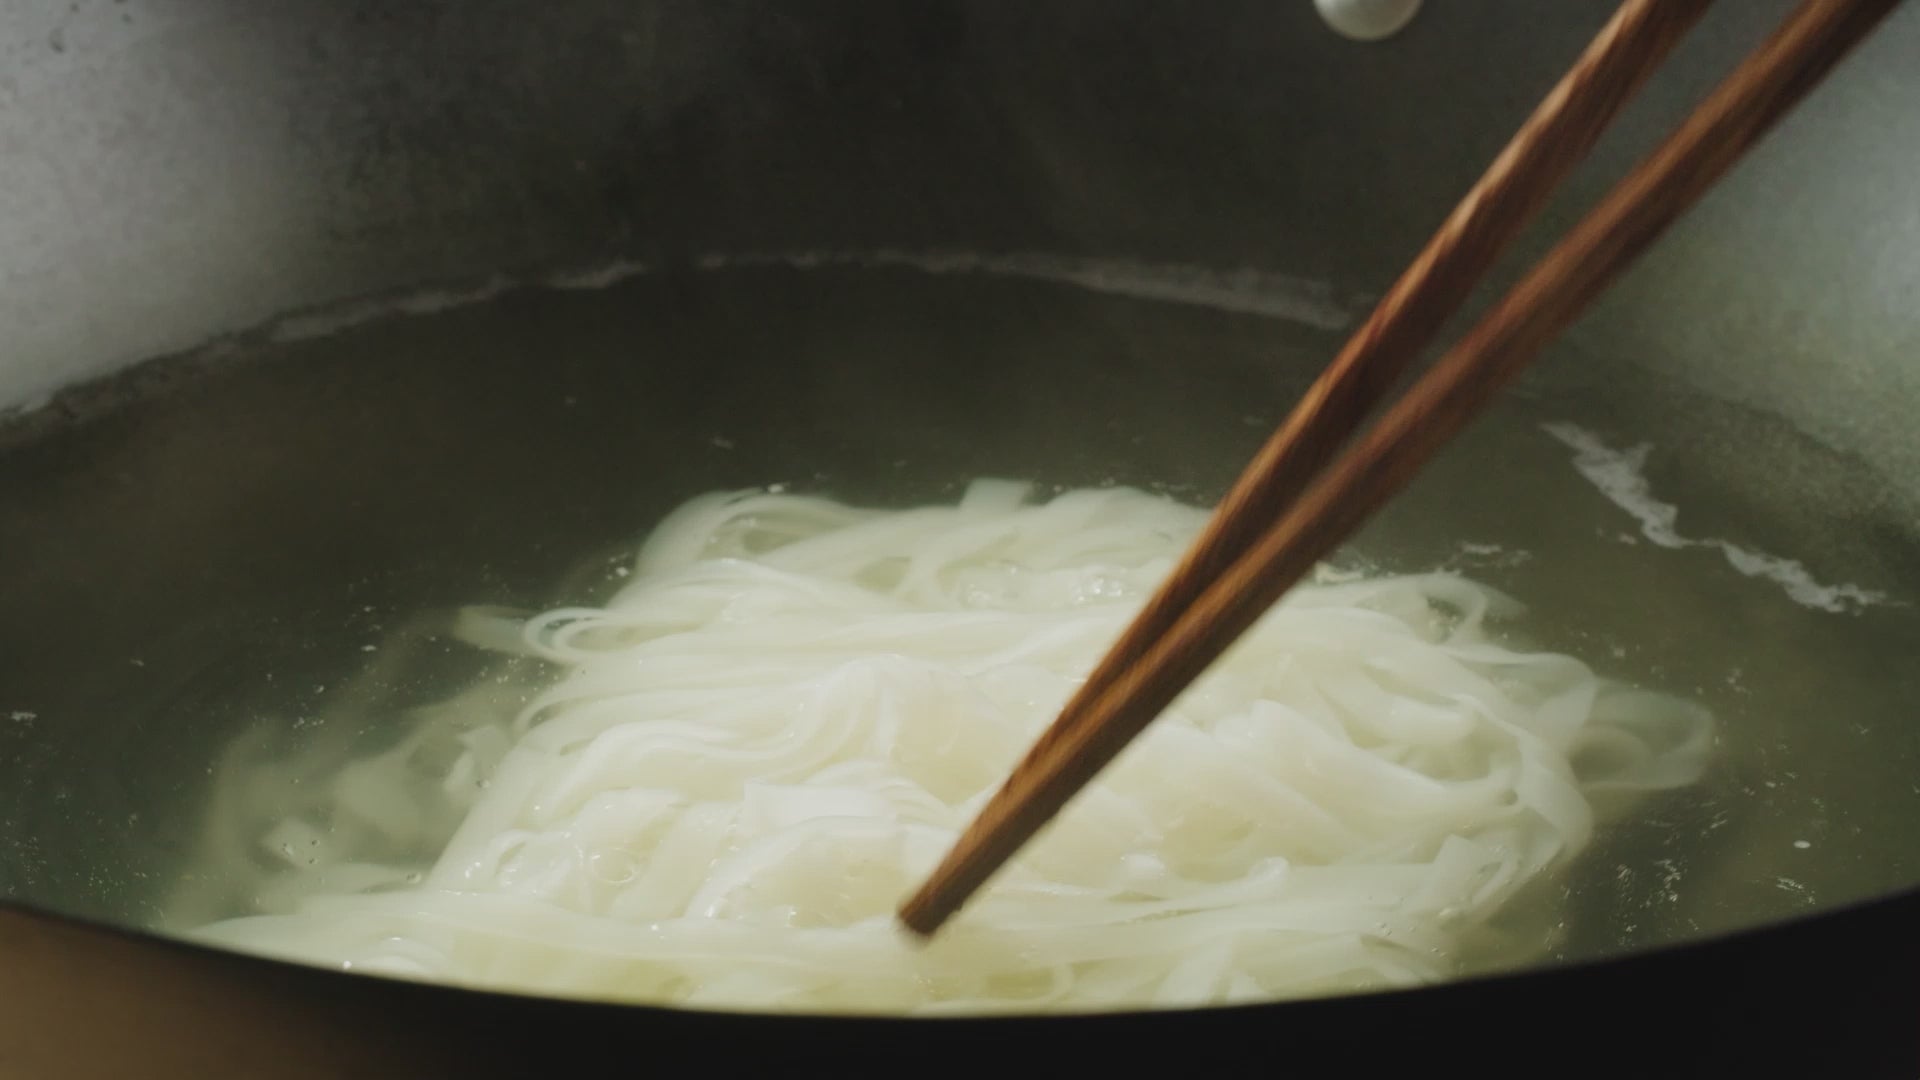 Load video: instant rice noodles ready to cook, just boil, add tastemaker and stir till noodles loosen up.